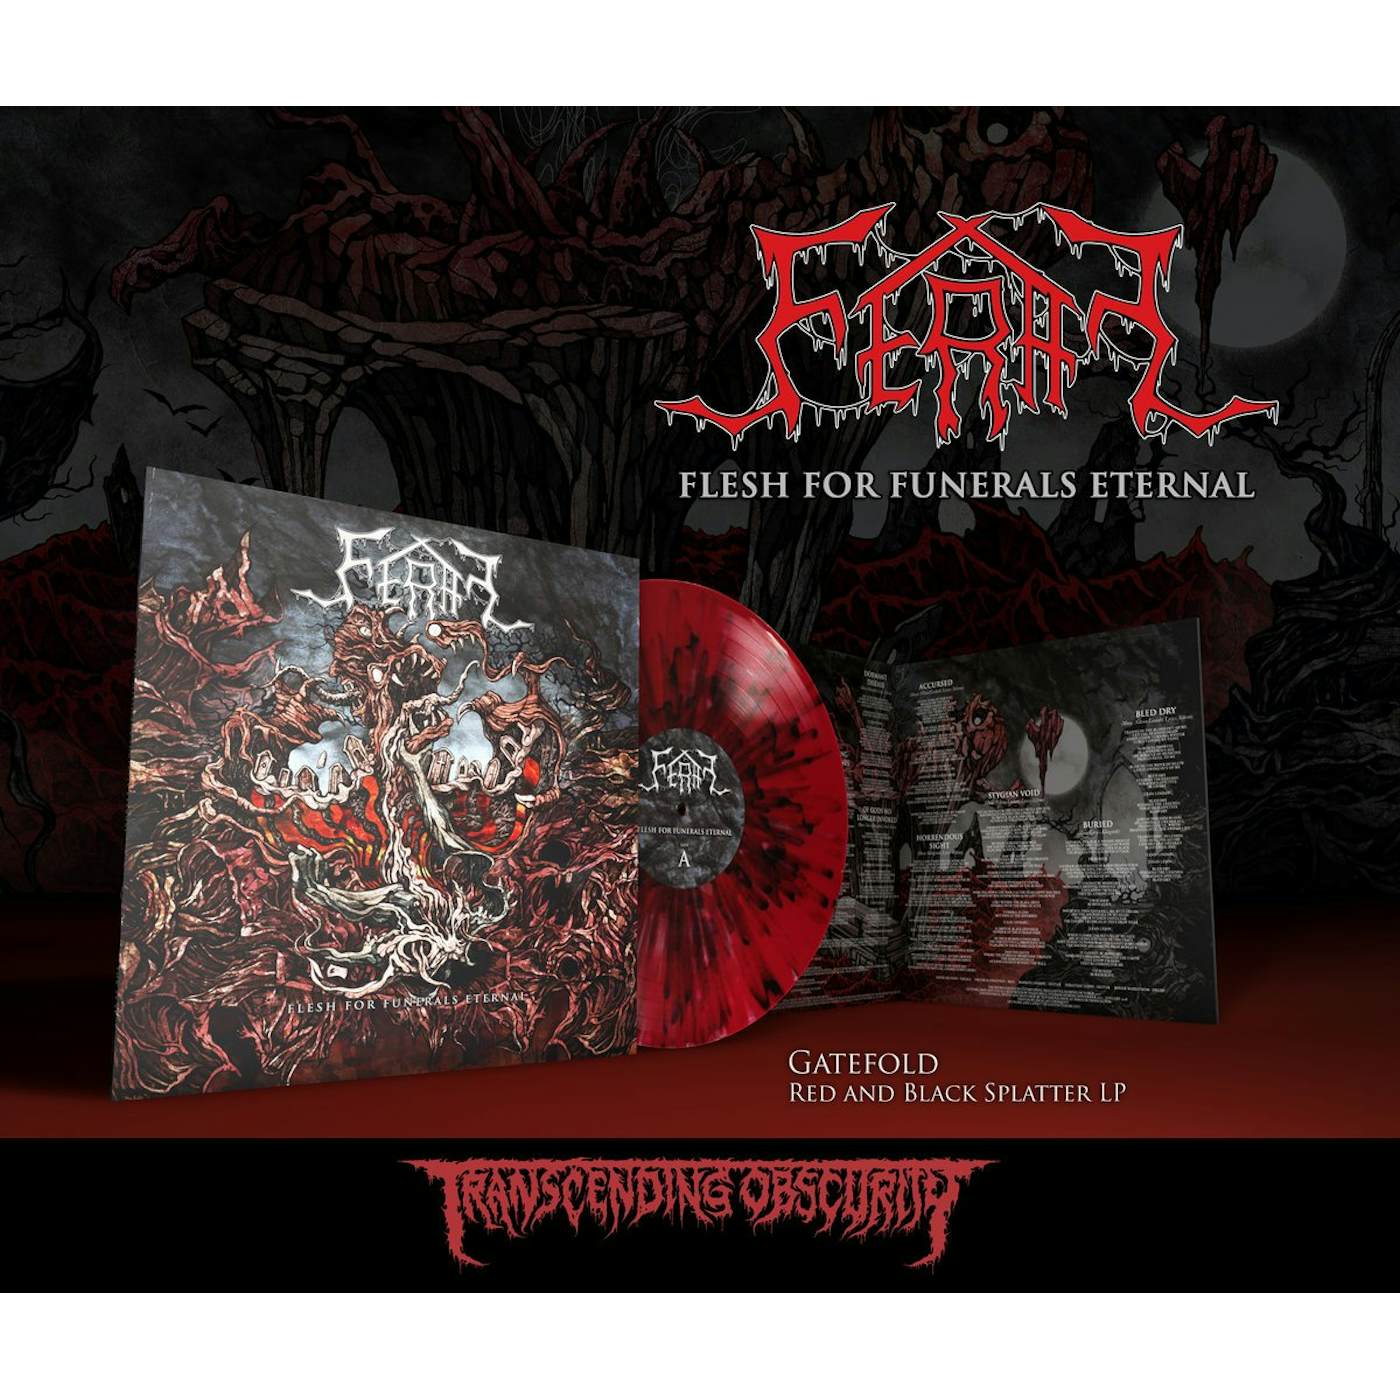 Feral (Sweden) "Flesh For Funerals Eternal" Limited Edition 12"